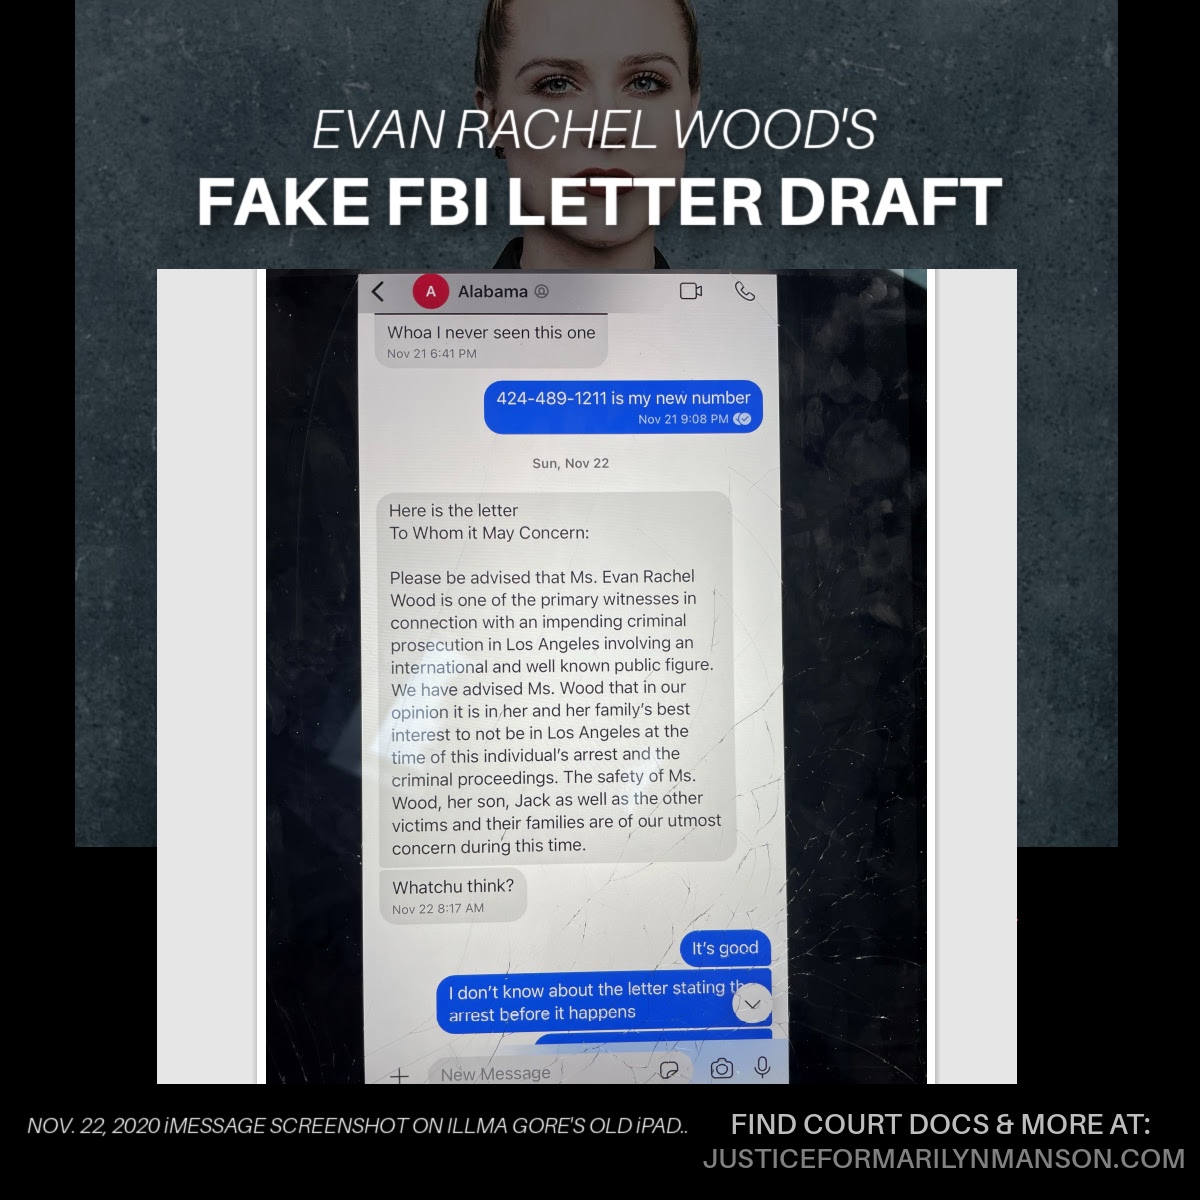 Court Documents I Evan Rachel Wood and Ashley Illma Gore draft fake FBI letter